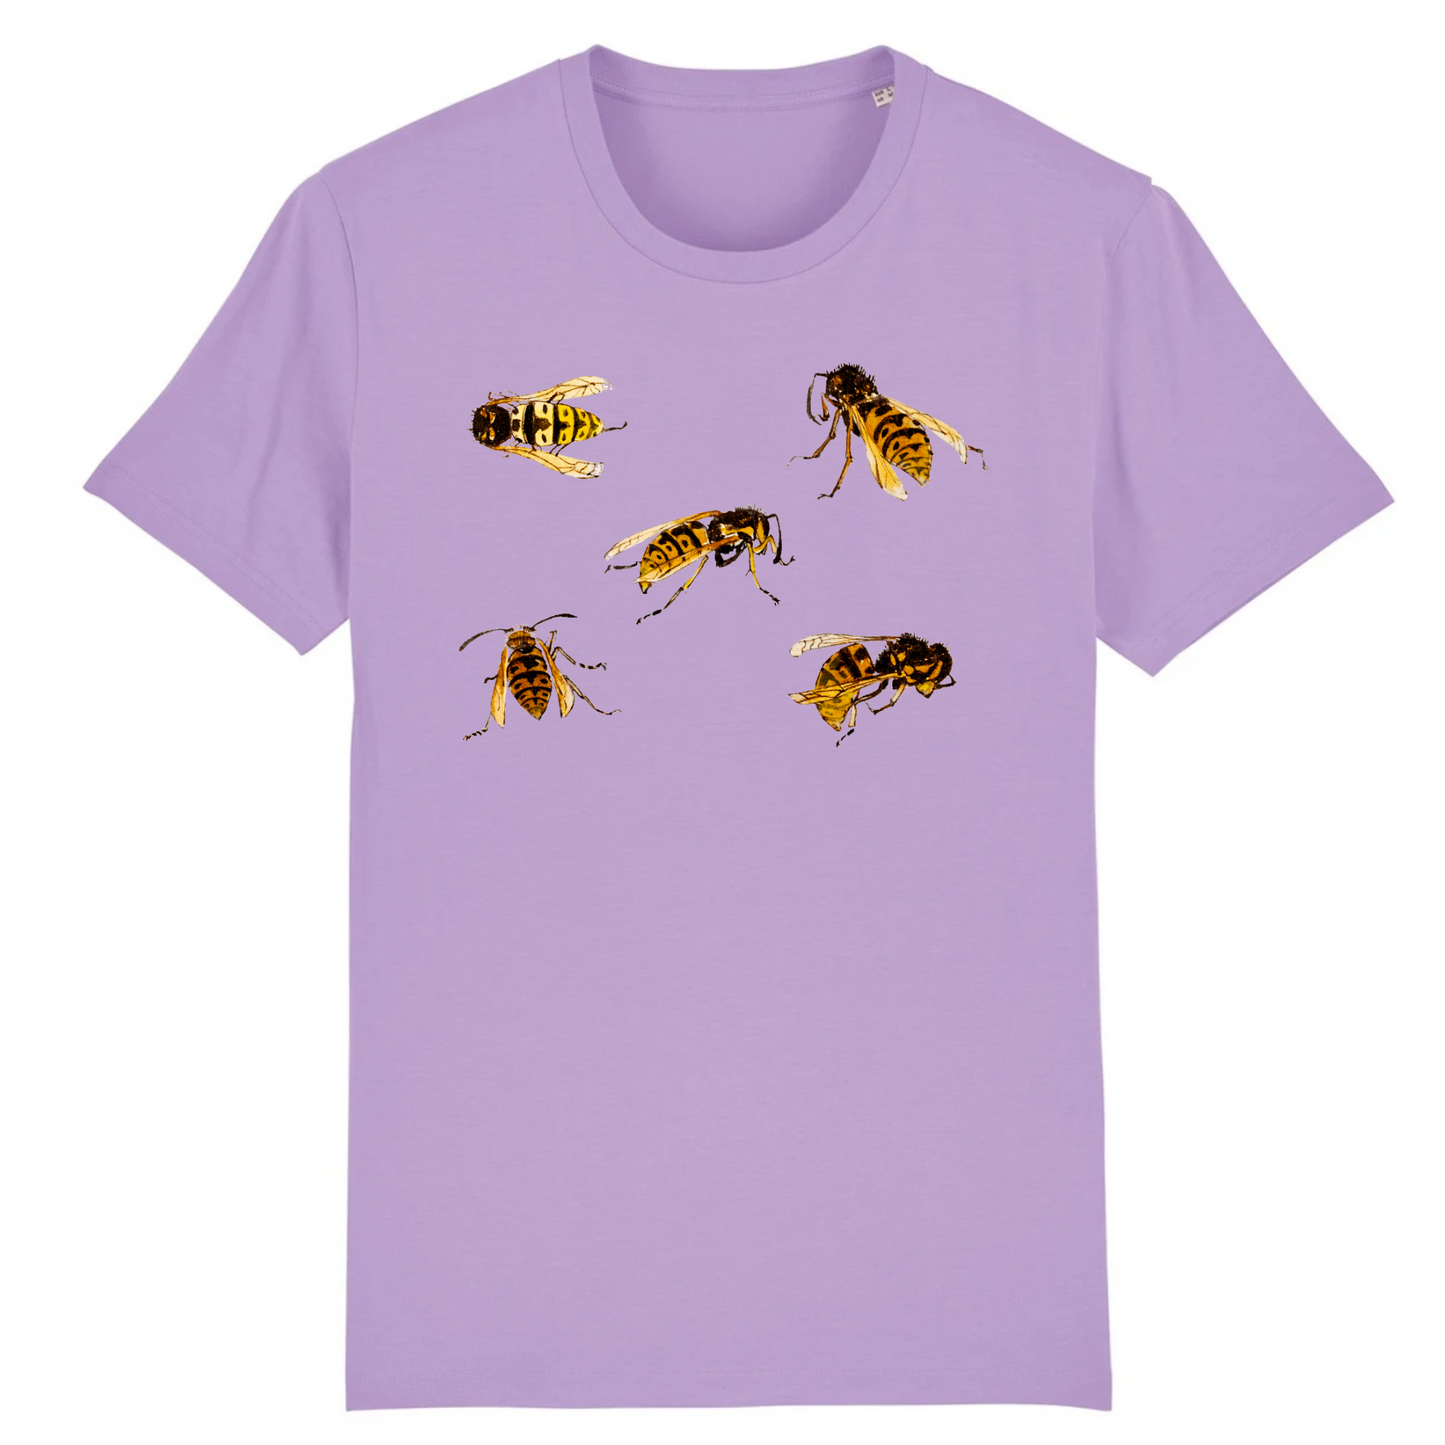 Studies of wasps by Julie de Graag, c. 1915 - Organic Cotton T-Shirt